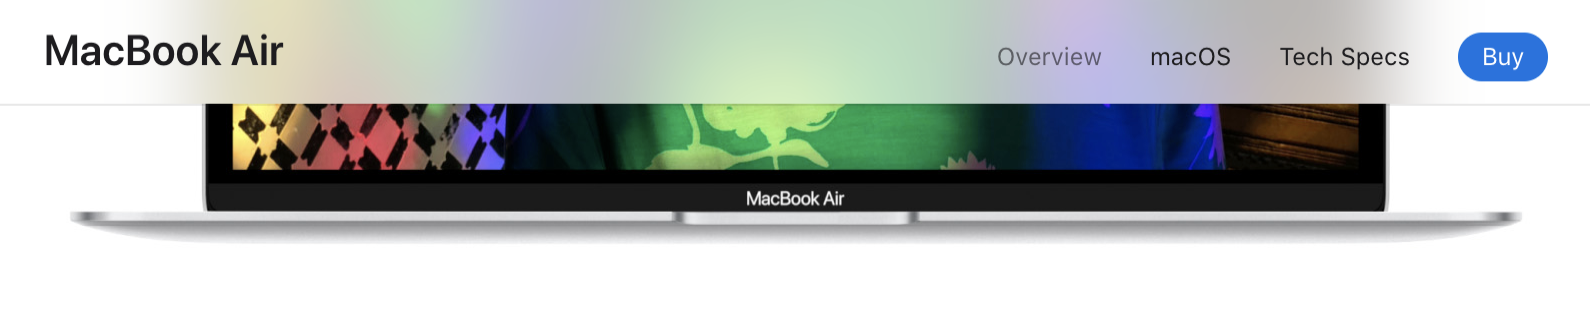 Frosted glass effect on navigation bar (apple.com)